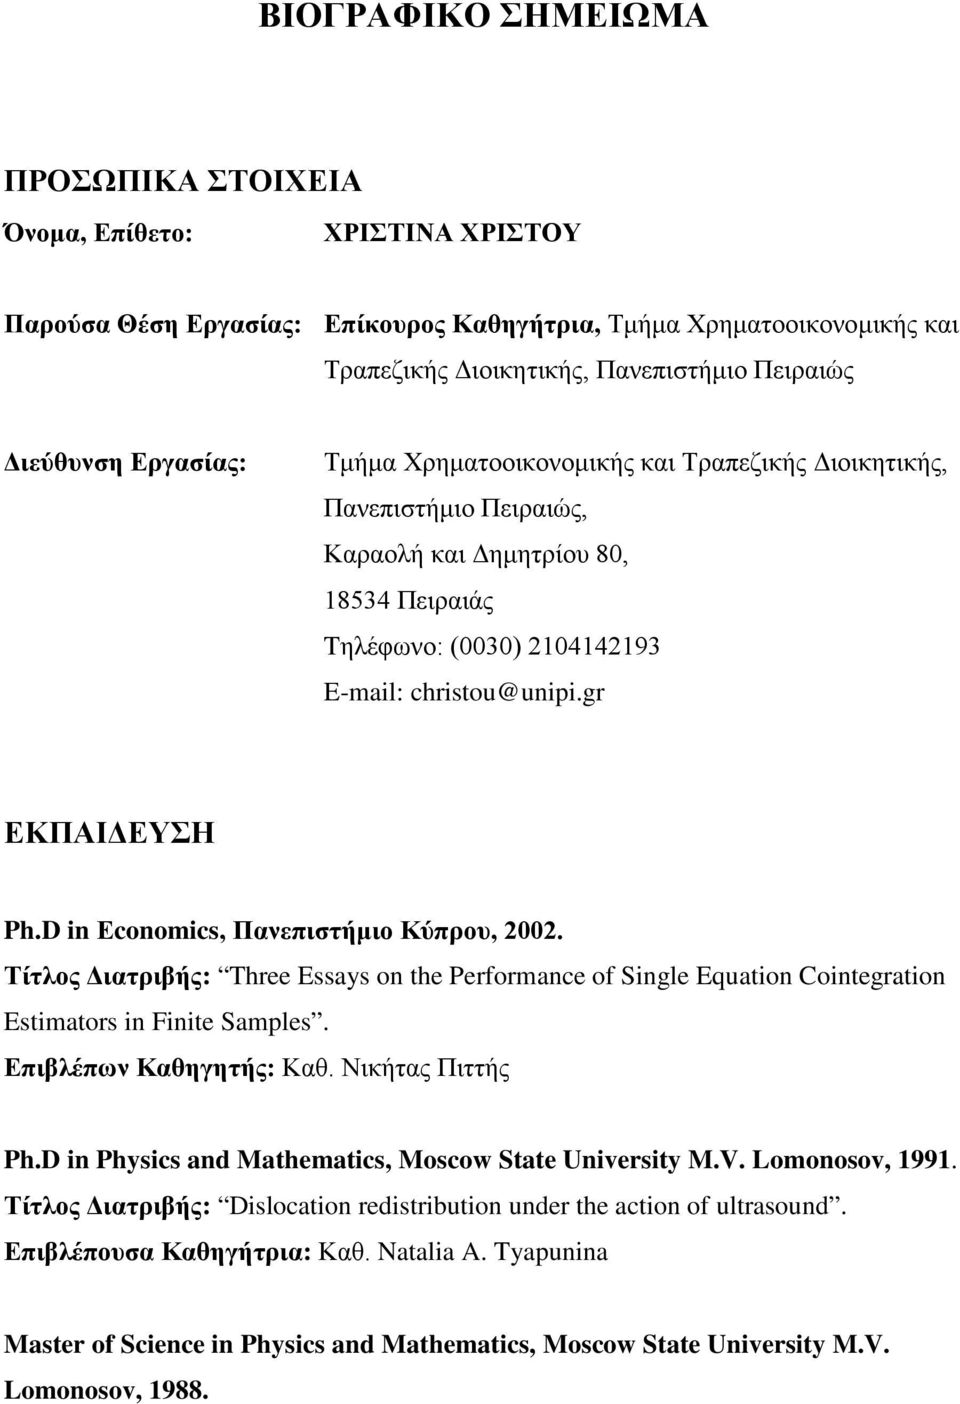 gr ΕΚΠΑΙΔΕΥΣΗ Ph.D in Εconomics, Πανεπιστήμιο Κύπρου, 2002. Τίτλος Διατριβής: Three Essays on the Performance of Single Equation Cointegration Estimators in Finite Samples. Επιβλέπων Καθηγητής: Καθ.